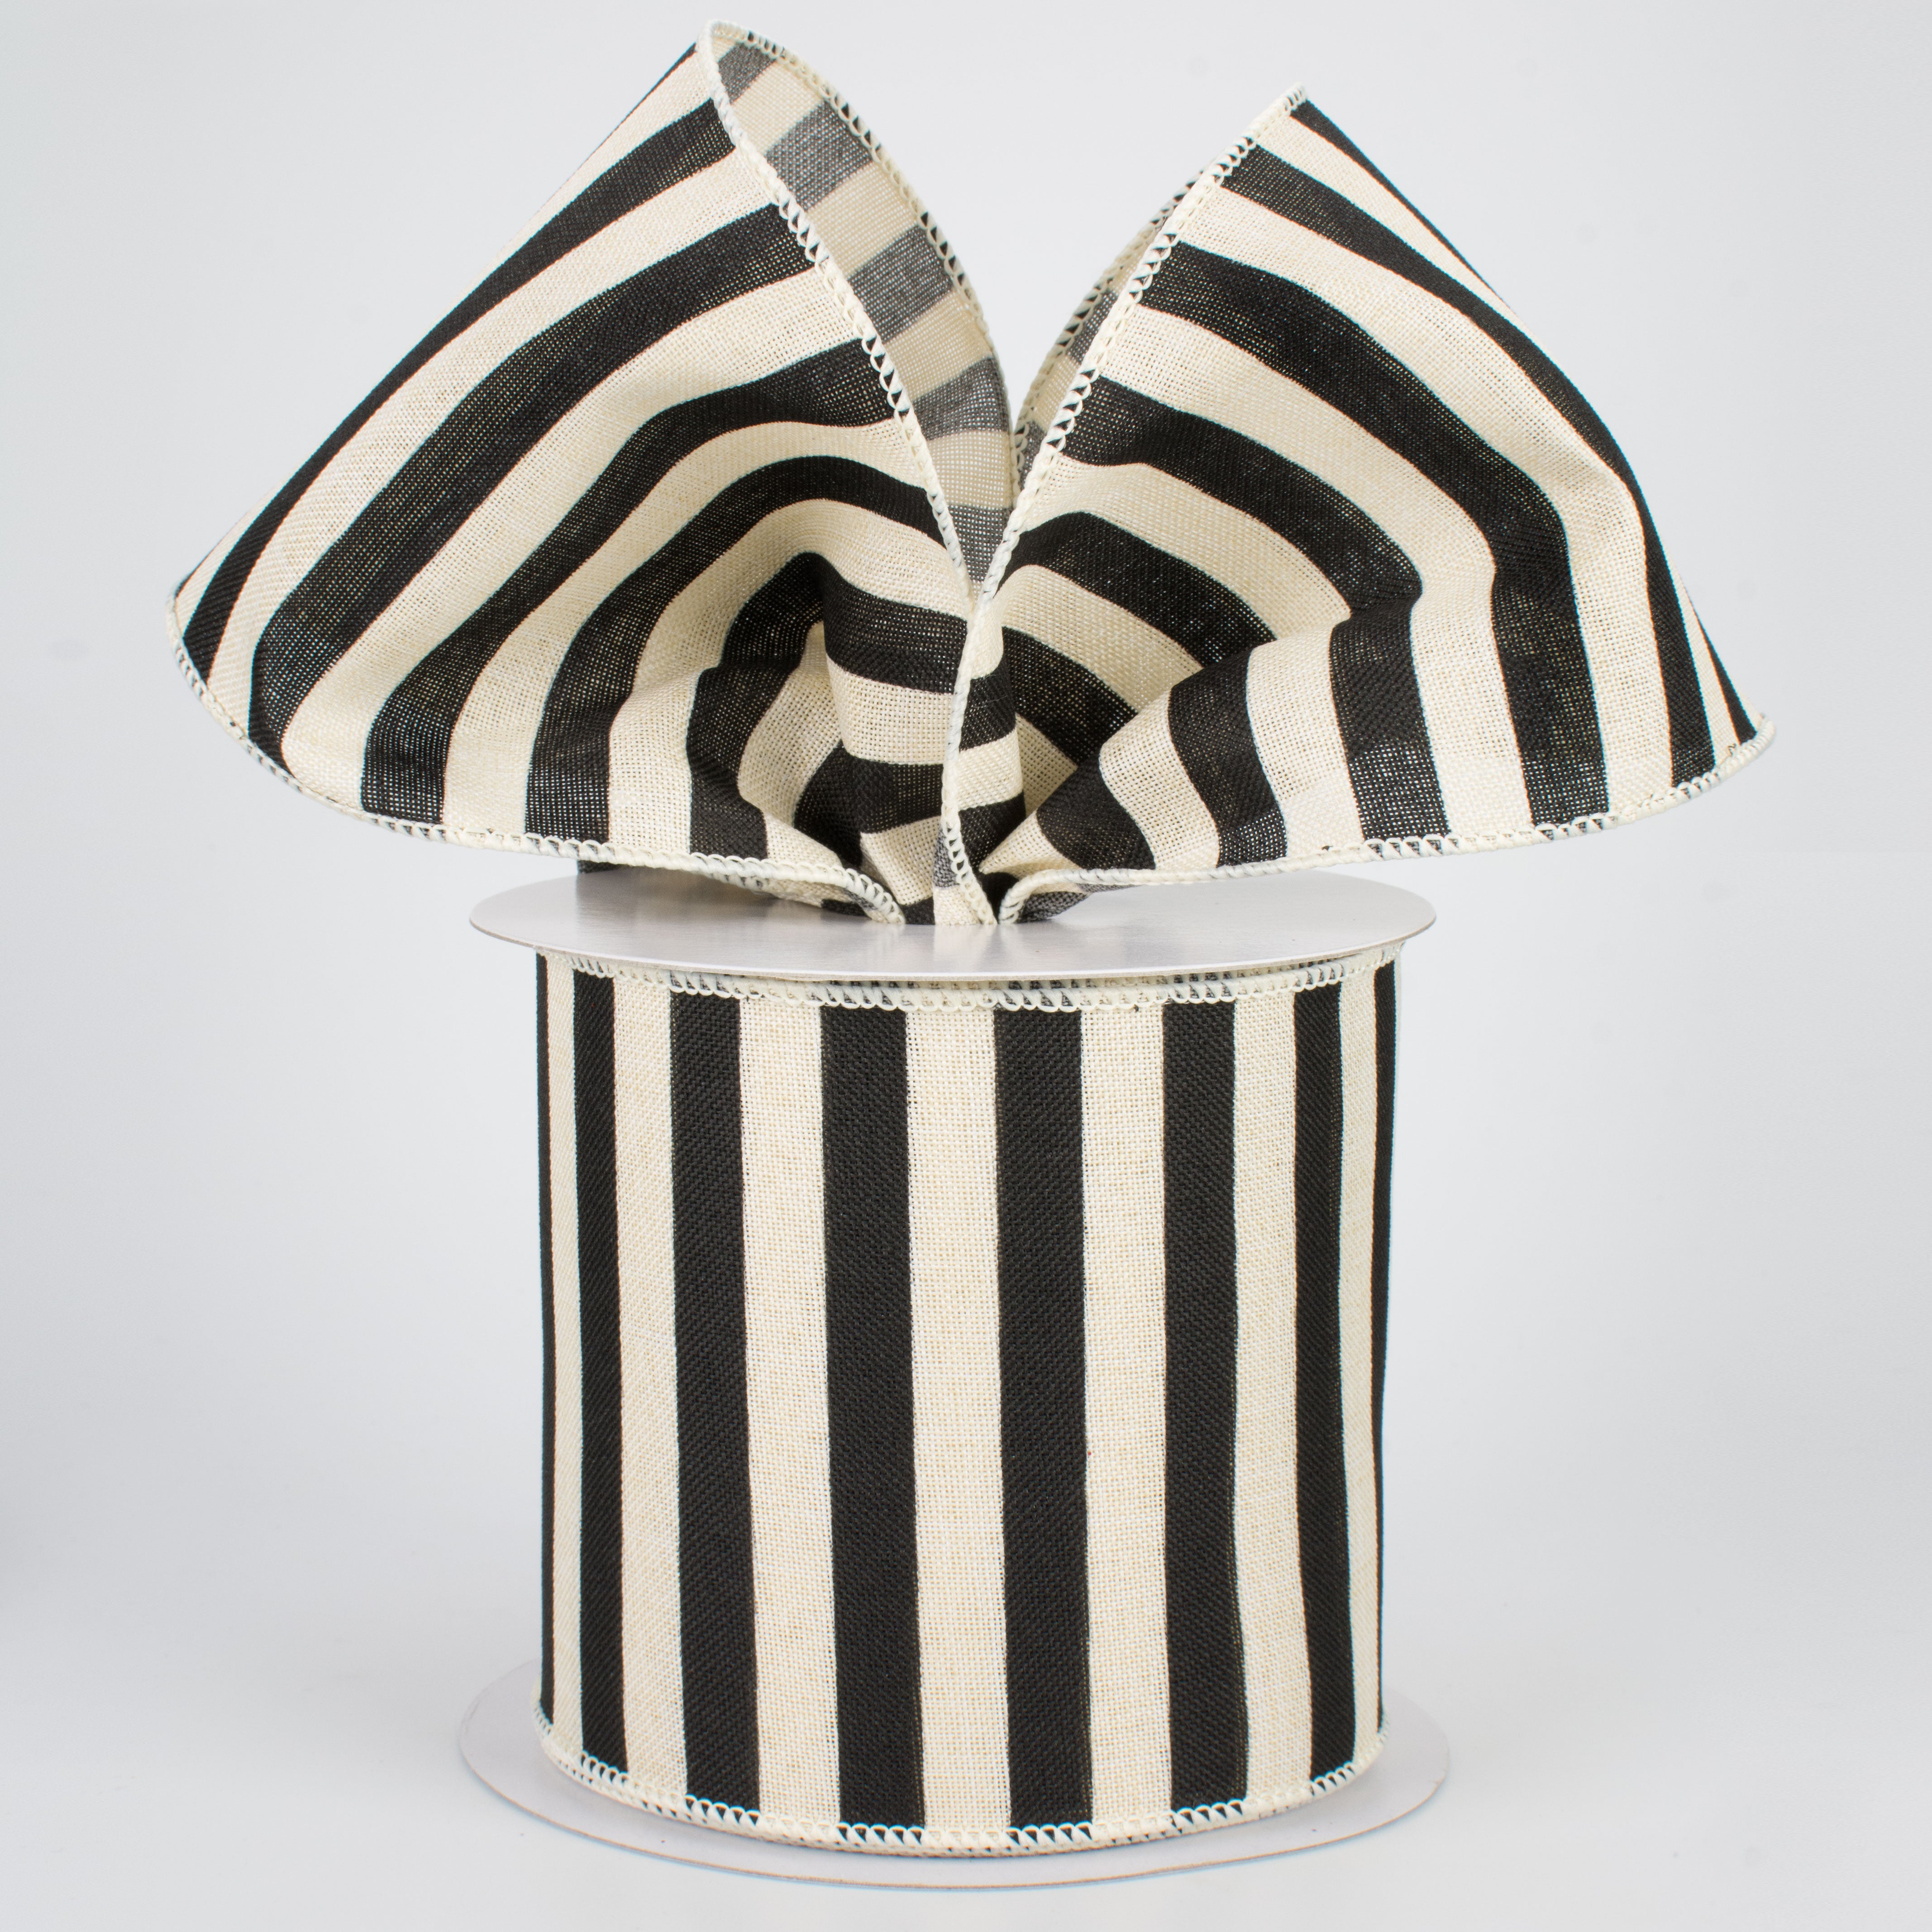 4" Medium Stripe Canvas Ribbon: Cream & Black (10 Yards)